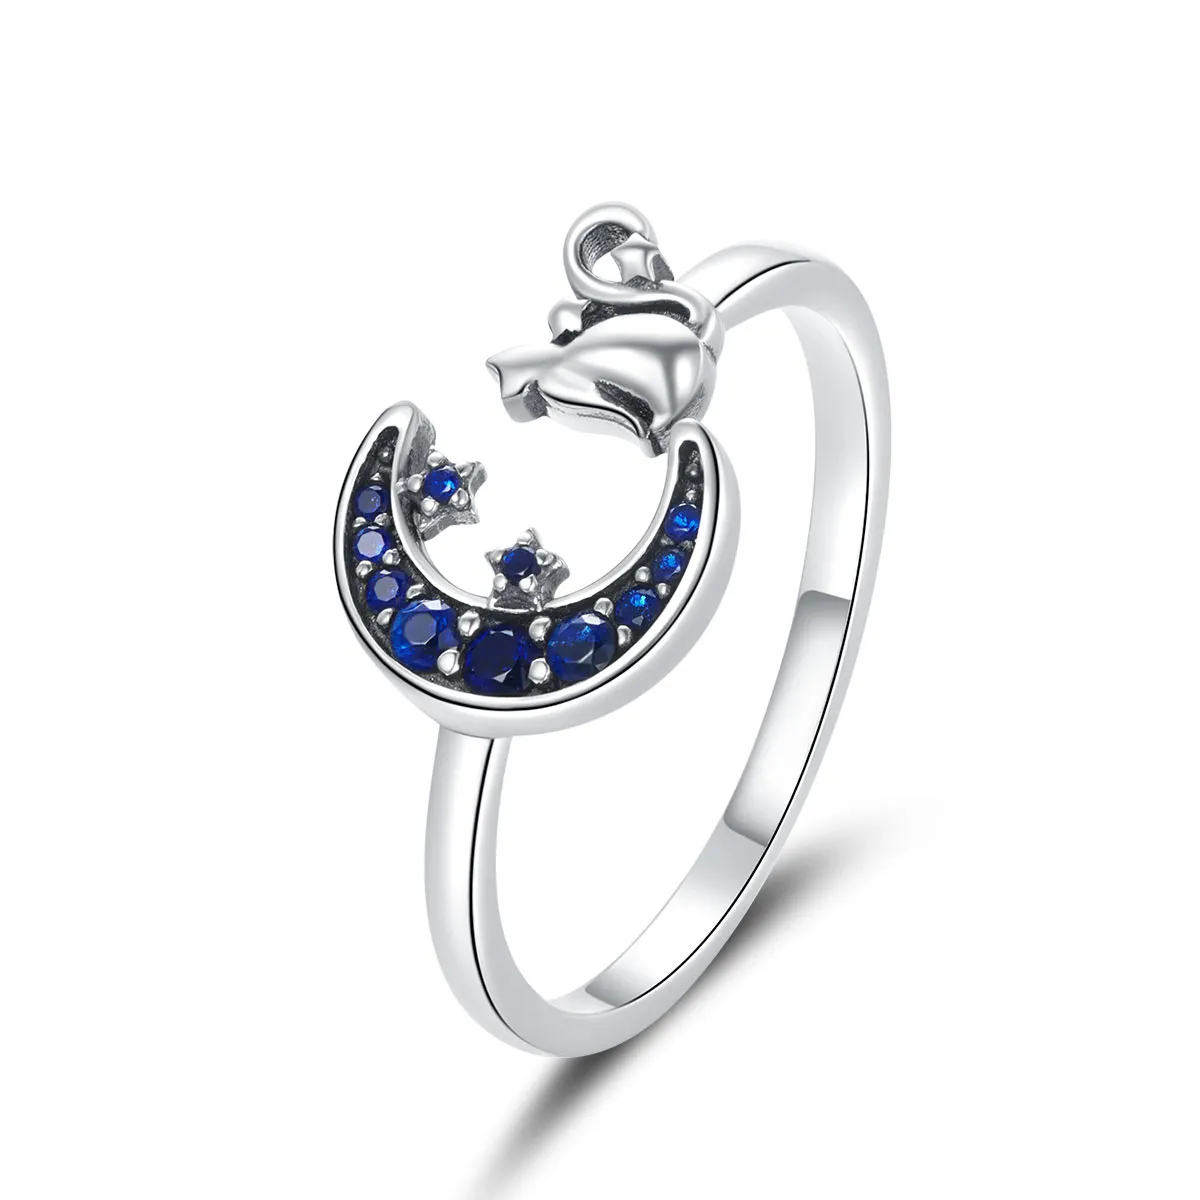 Pandora Style Silver Moon & Cat Open Ring - SCR677